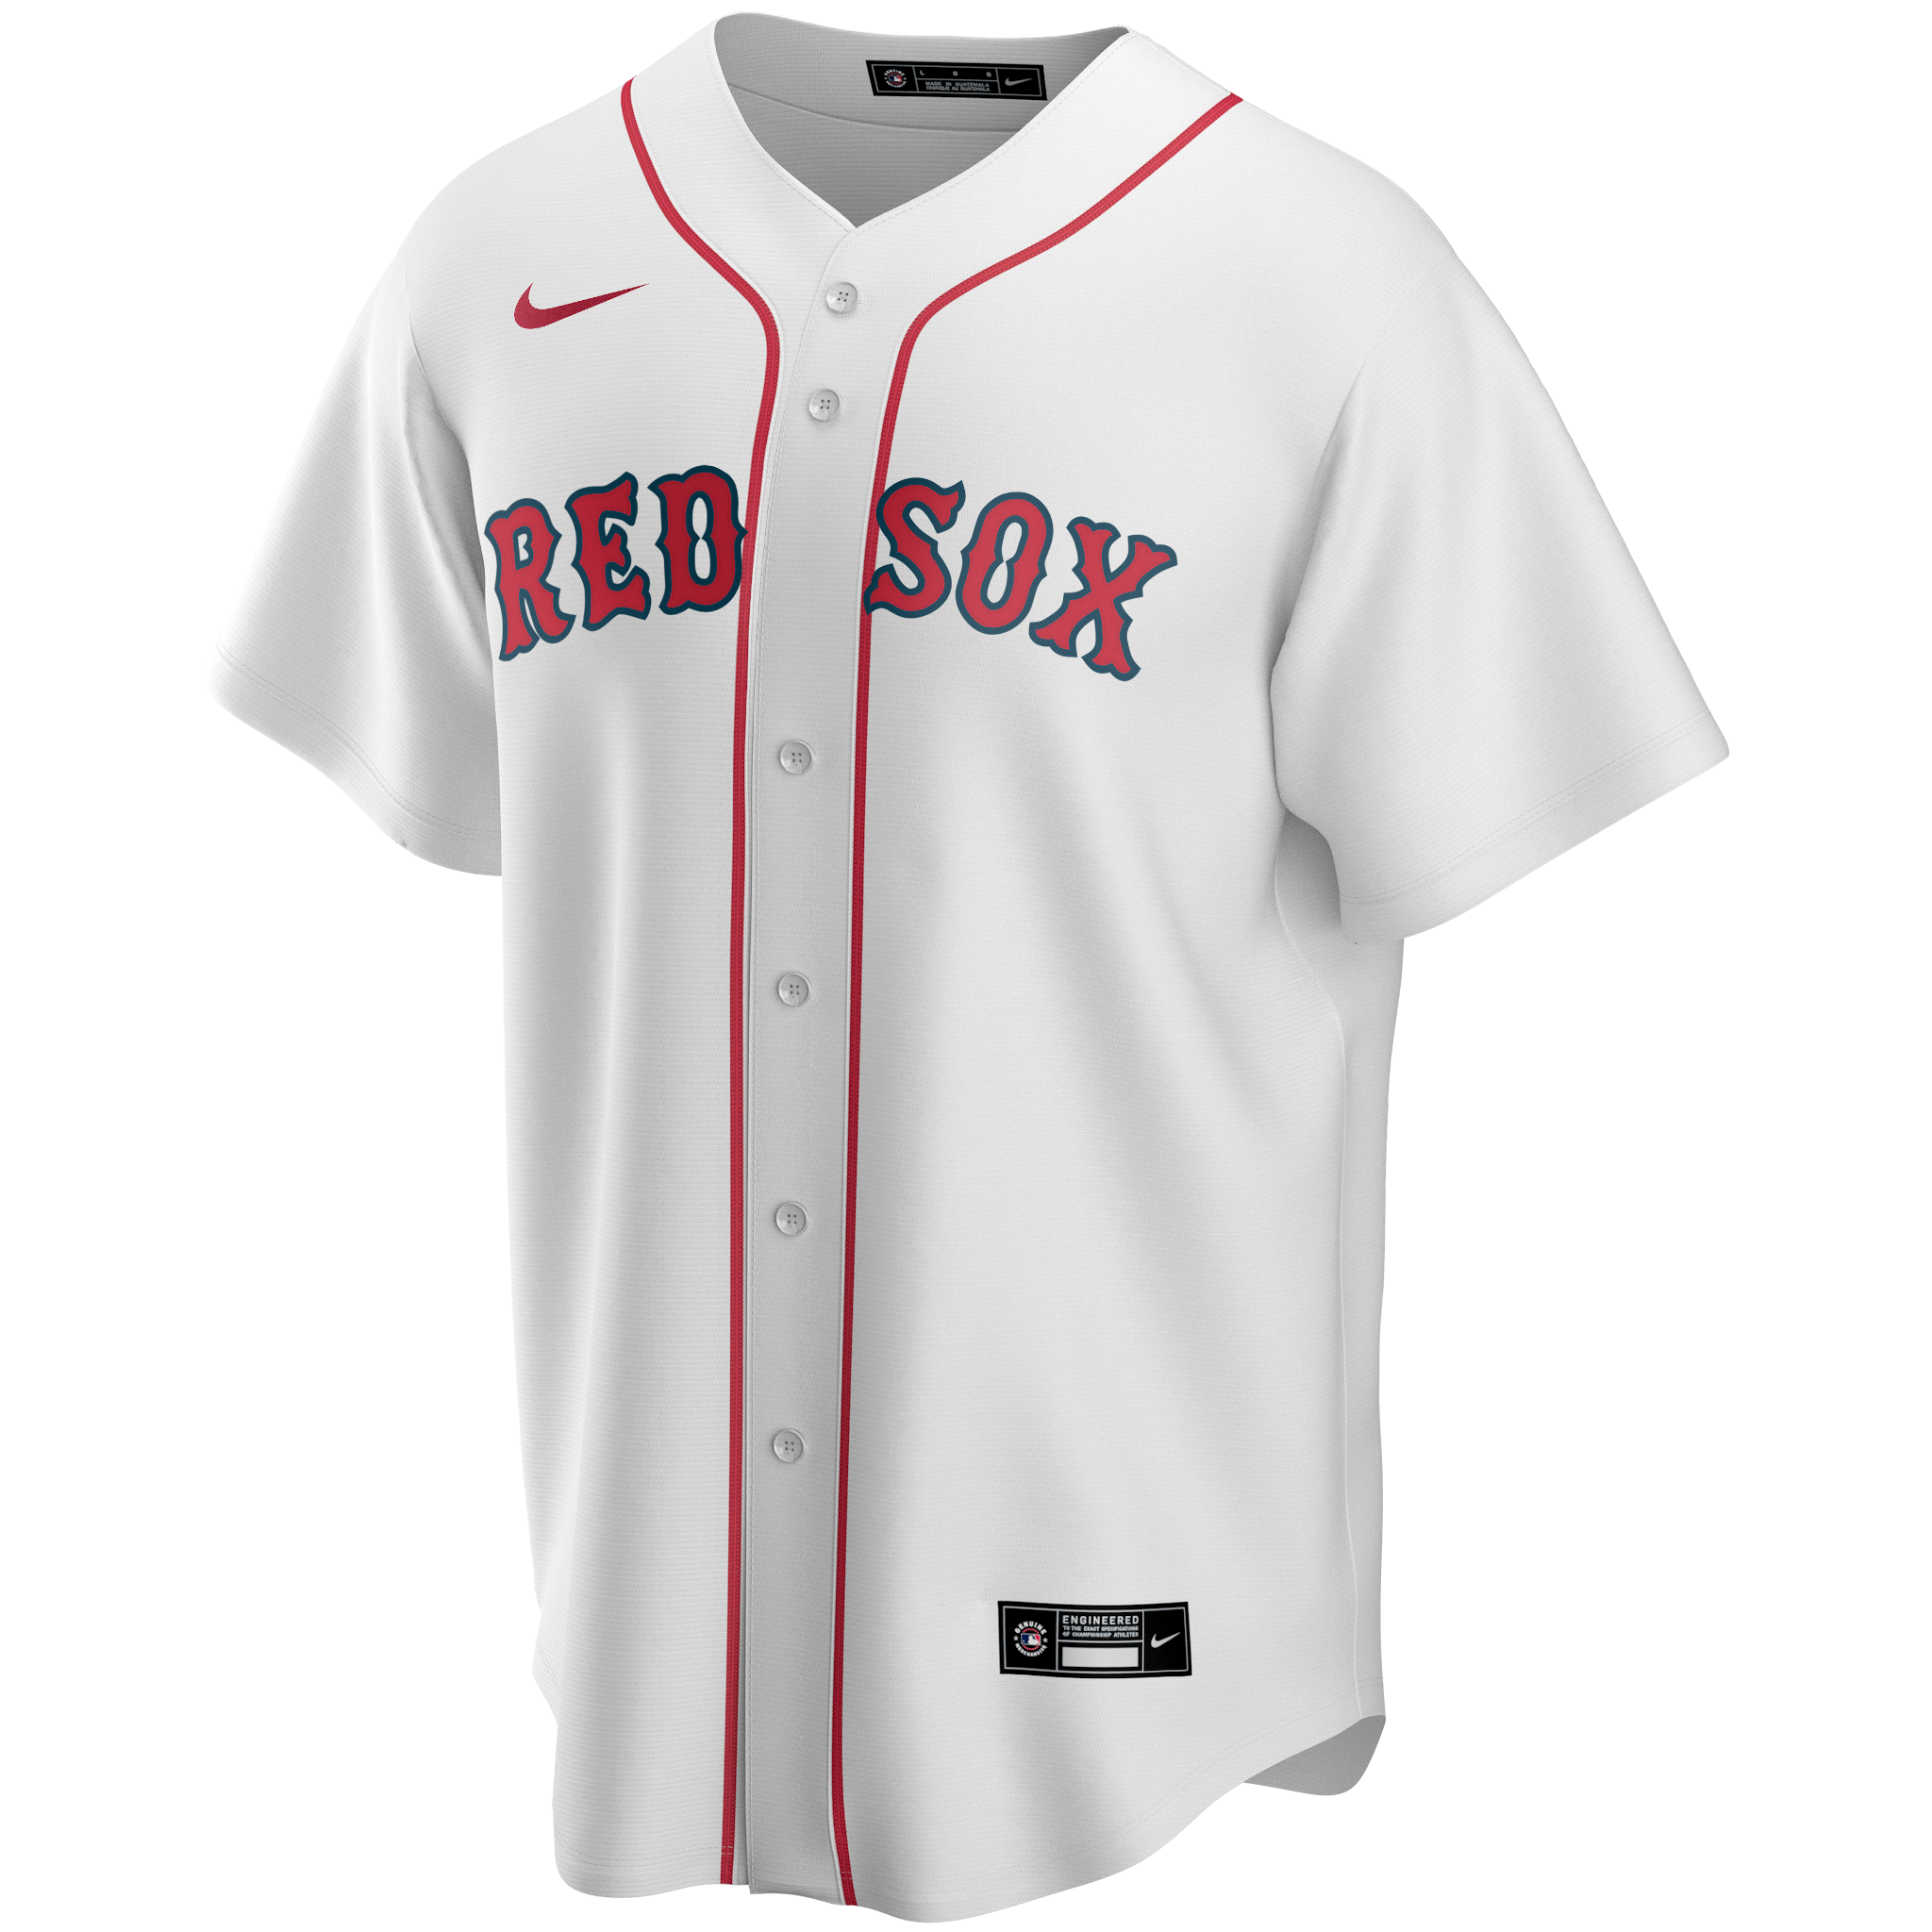 Boston Red Sox Home Uniform - American League (AL) - Chris